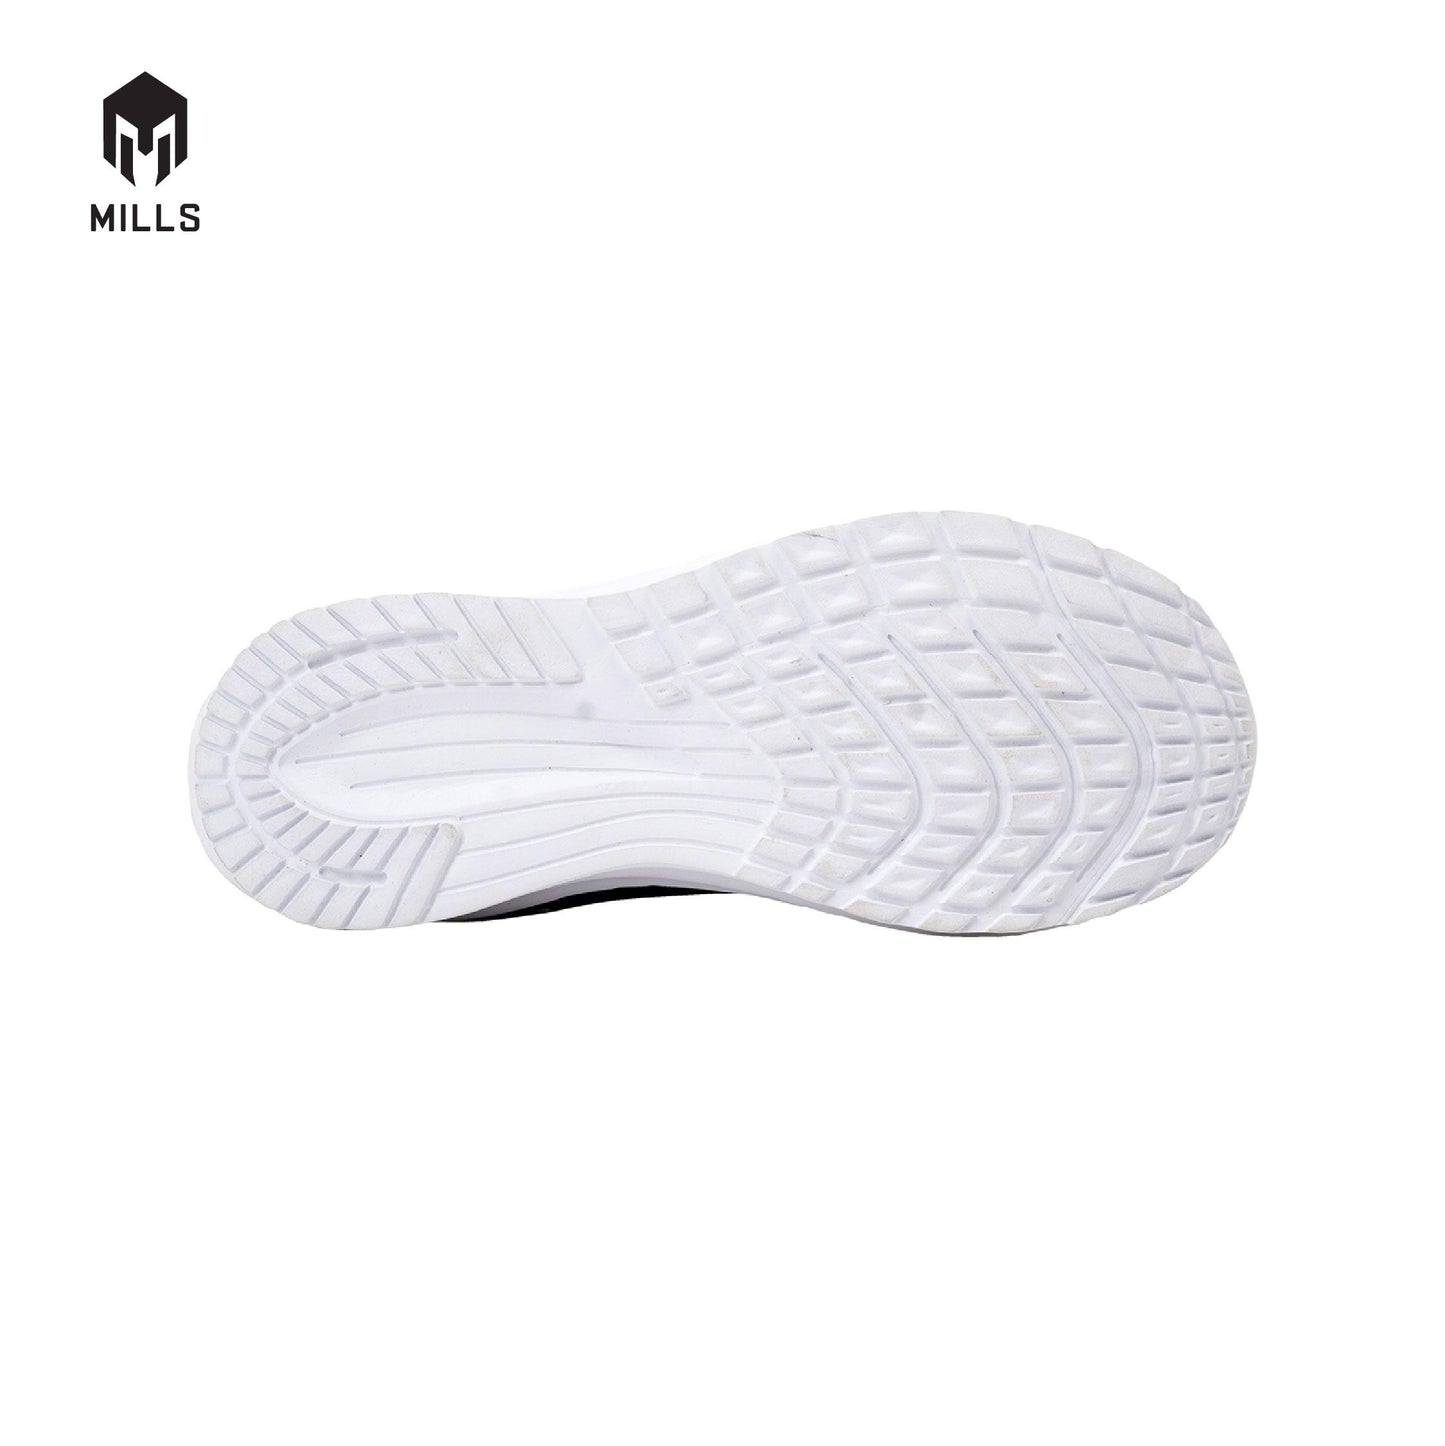 MILLS Sepatu Evander Black / White 9700802